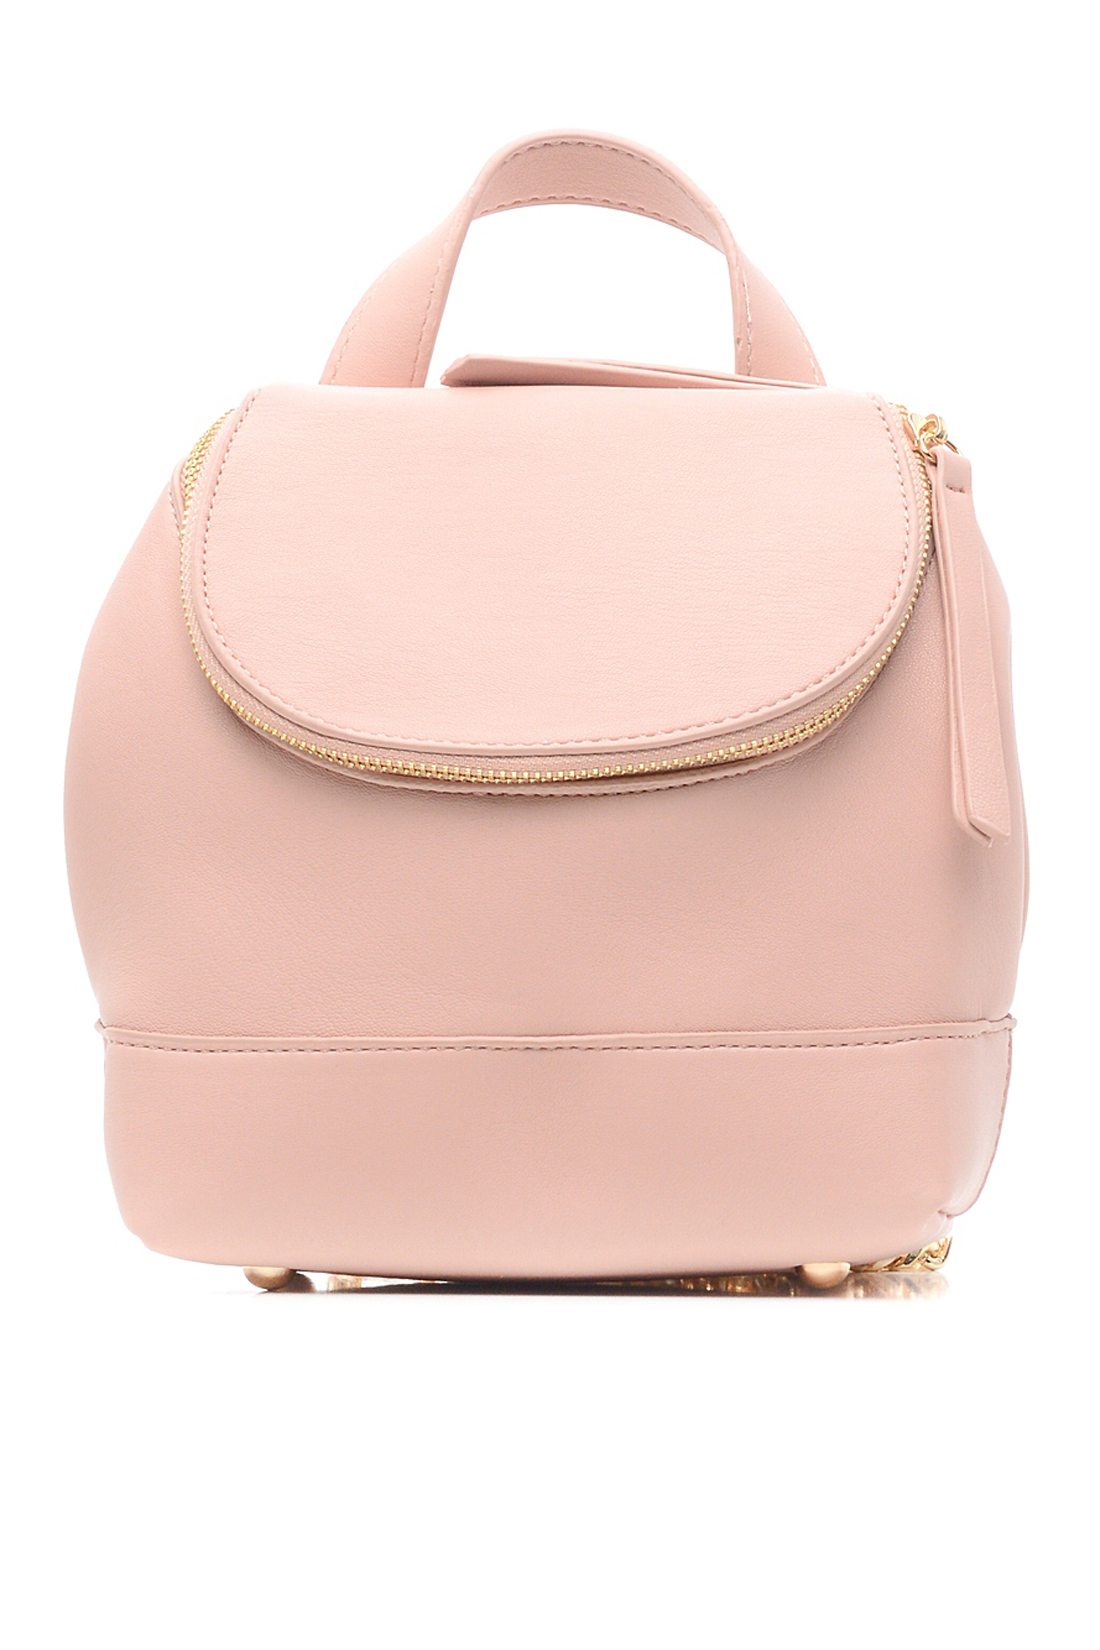 Рюкзак с цепочками (арт. baon B378006), размер Без/раз, цвет розовый